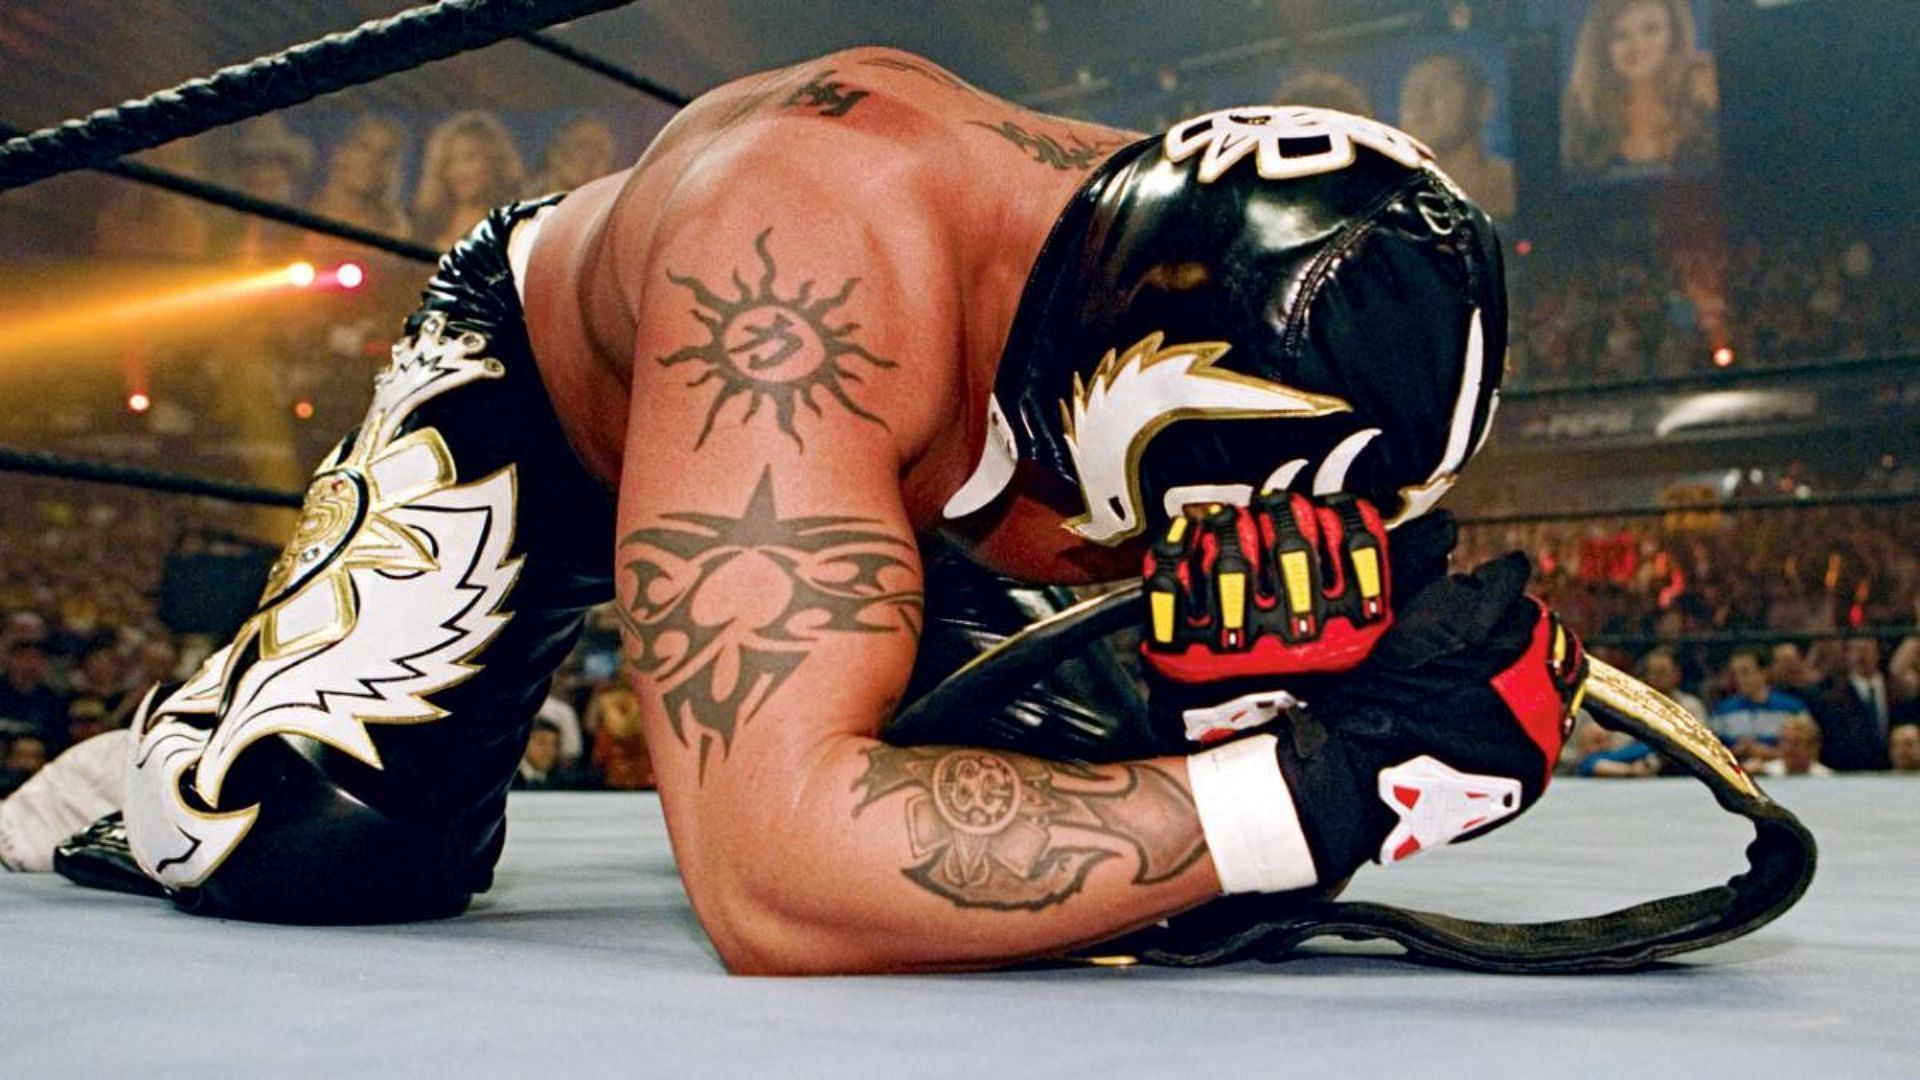 Rey Mysterio won his first World Heavyweight Title at WrestleMania 22.